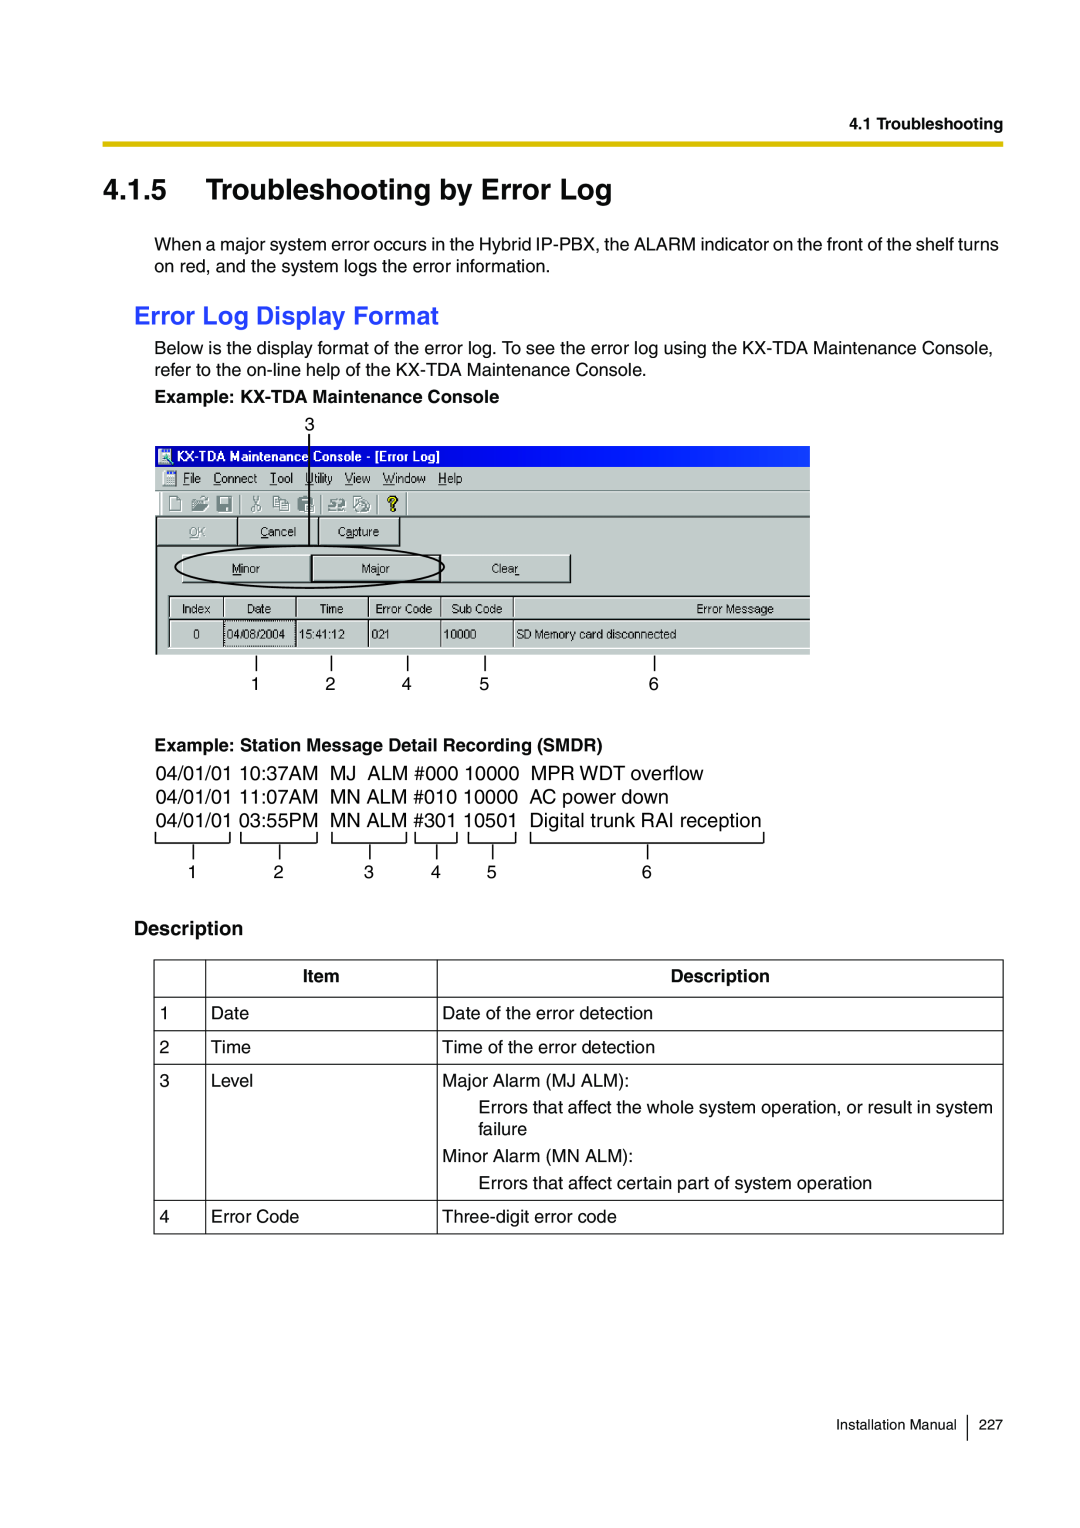 Panasonic KX-TDA100 installation manual Troubleshooting by Error Log, Error Log Display Format, Description 